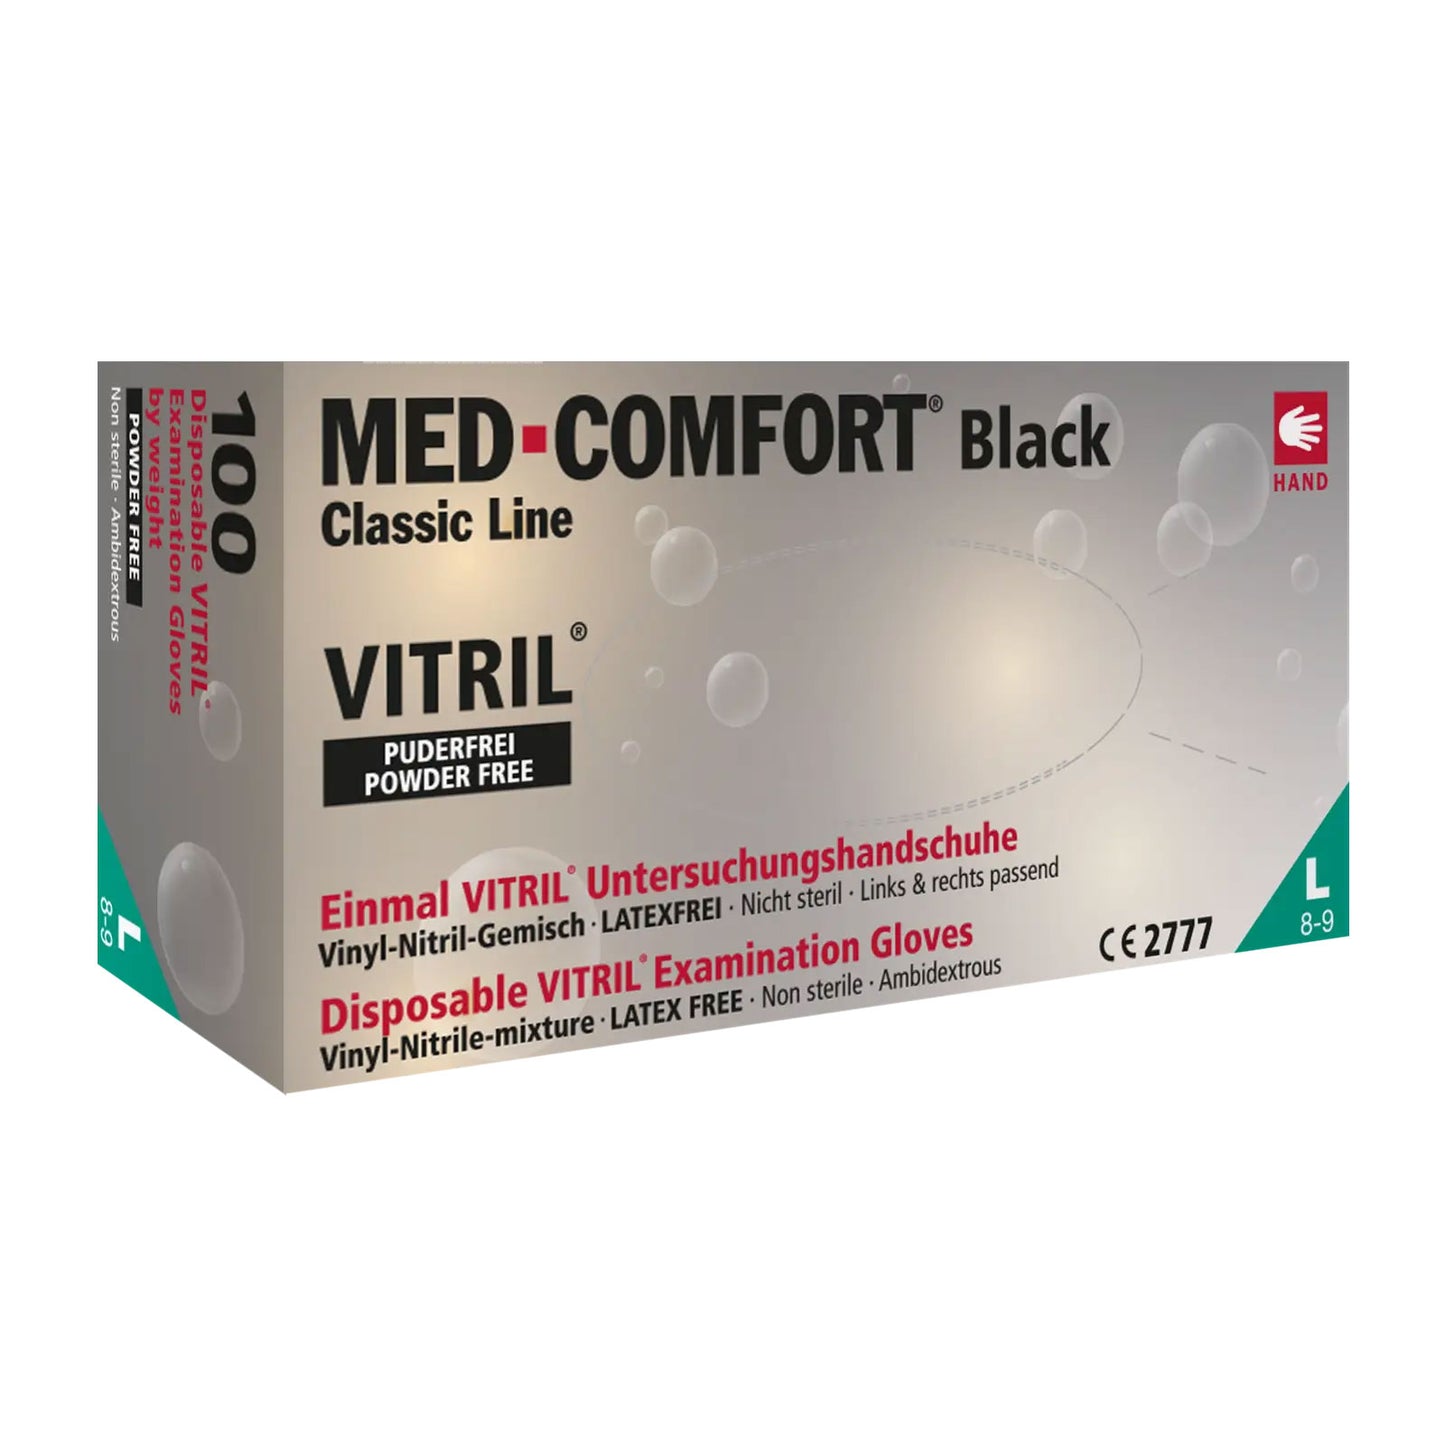 Vitrilhandschuhe, schwarz, puderfrei, Med-Comfort black Vitril